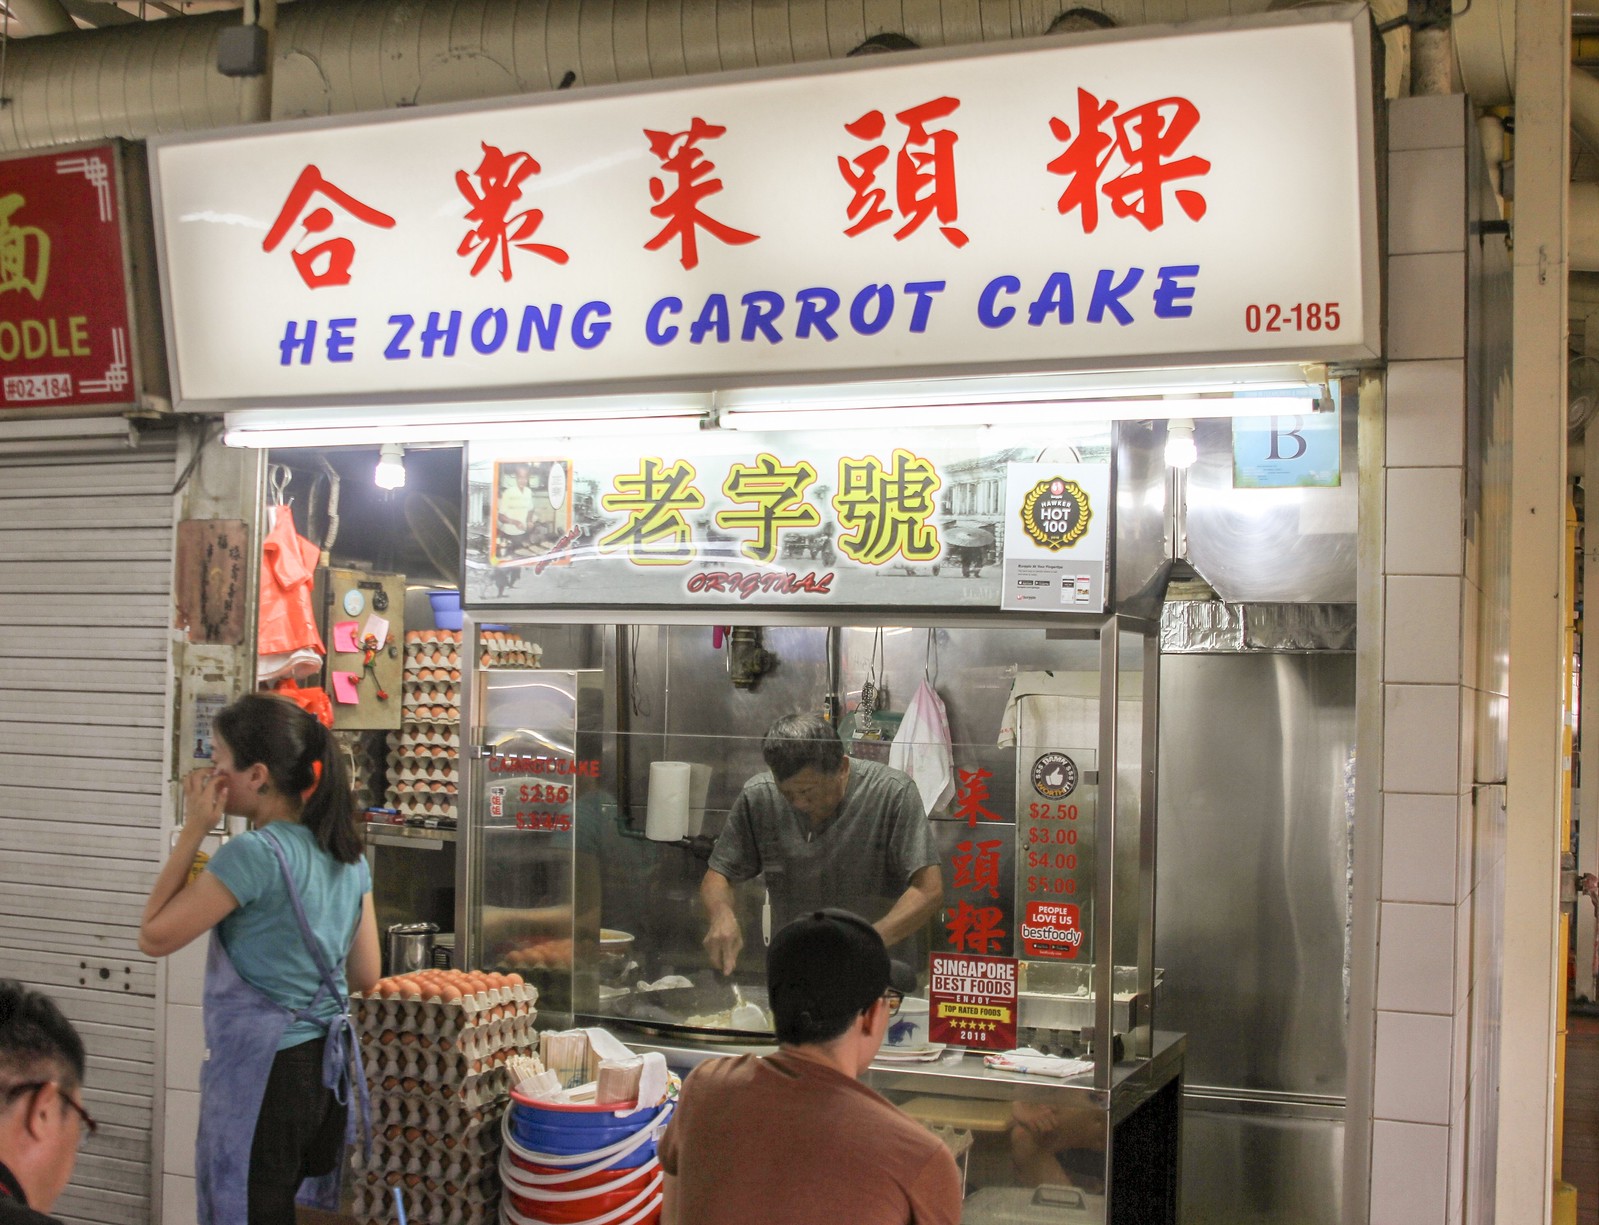 Bukit Timah Food Centre - He Zhong Carrot Cake Stall Front